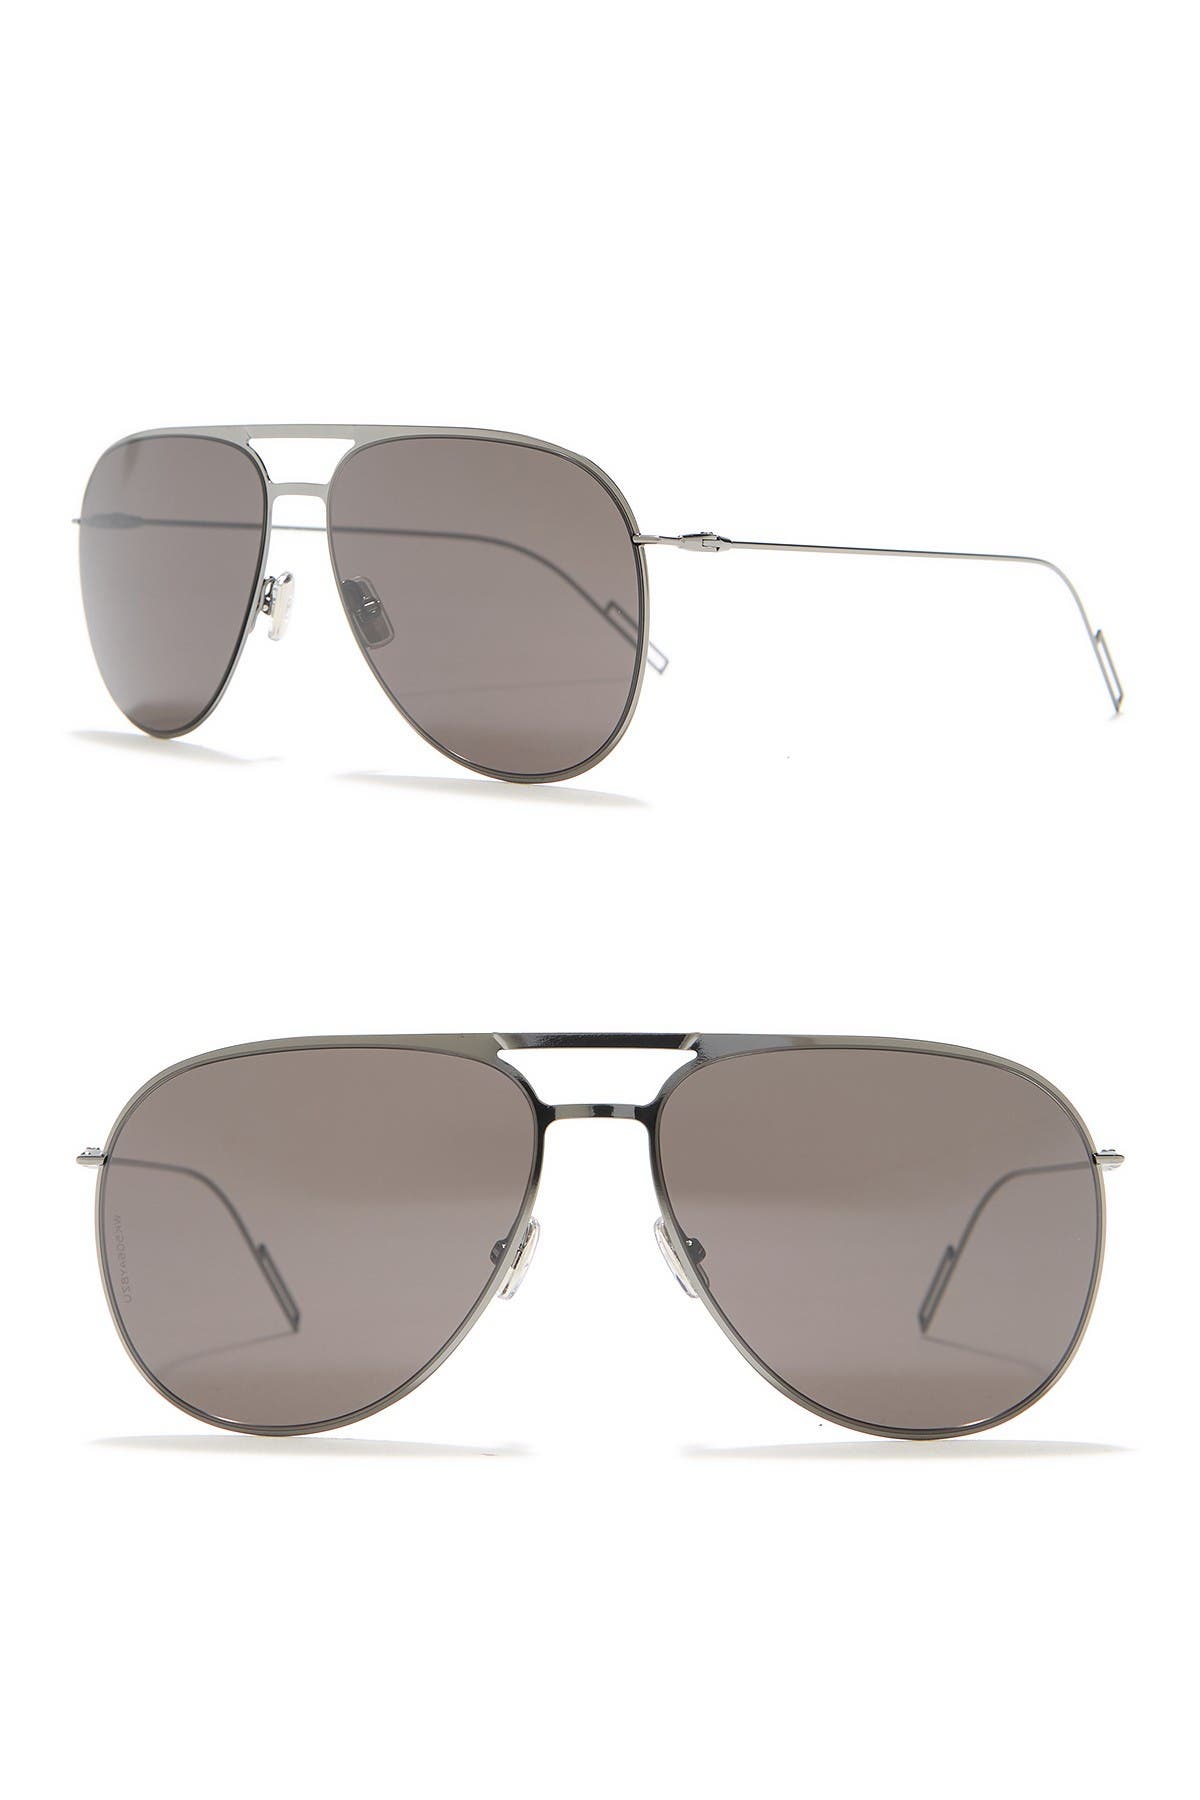 DIOR HOMME | Aviator 59mm Sunglasses 